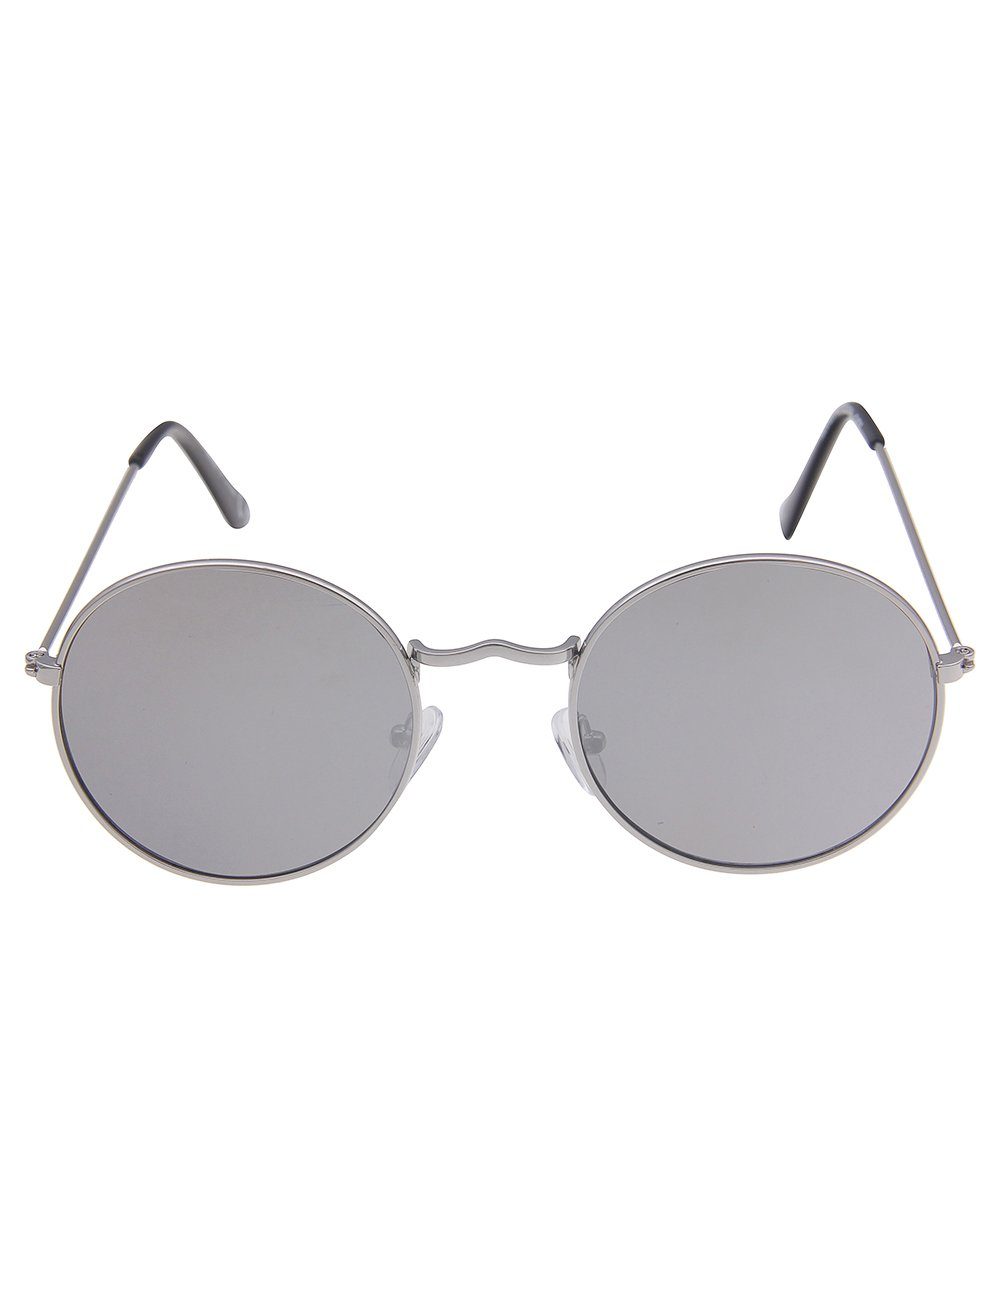 leslii Sonnenbrille Boho im angesagten Boho-Stil | Sonnenbrillen